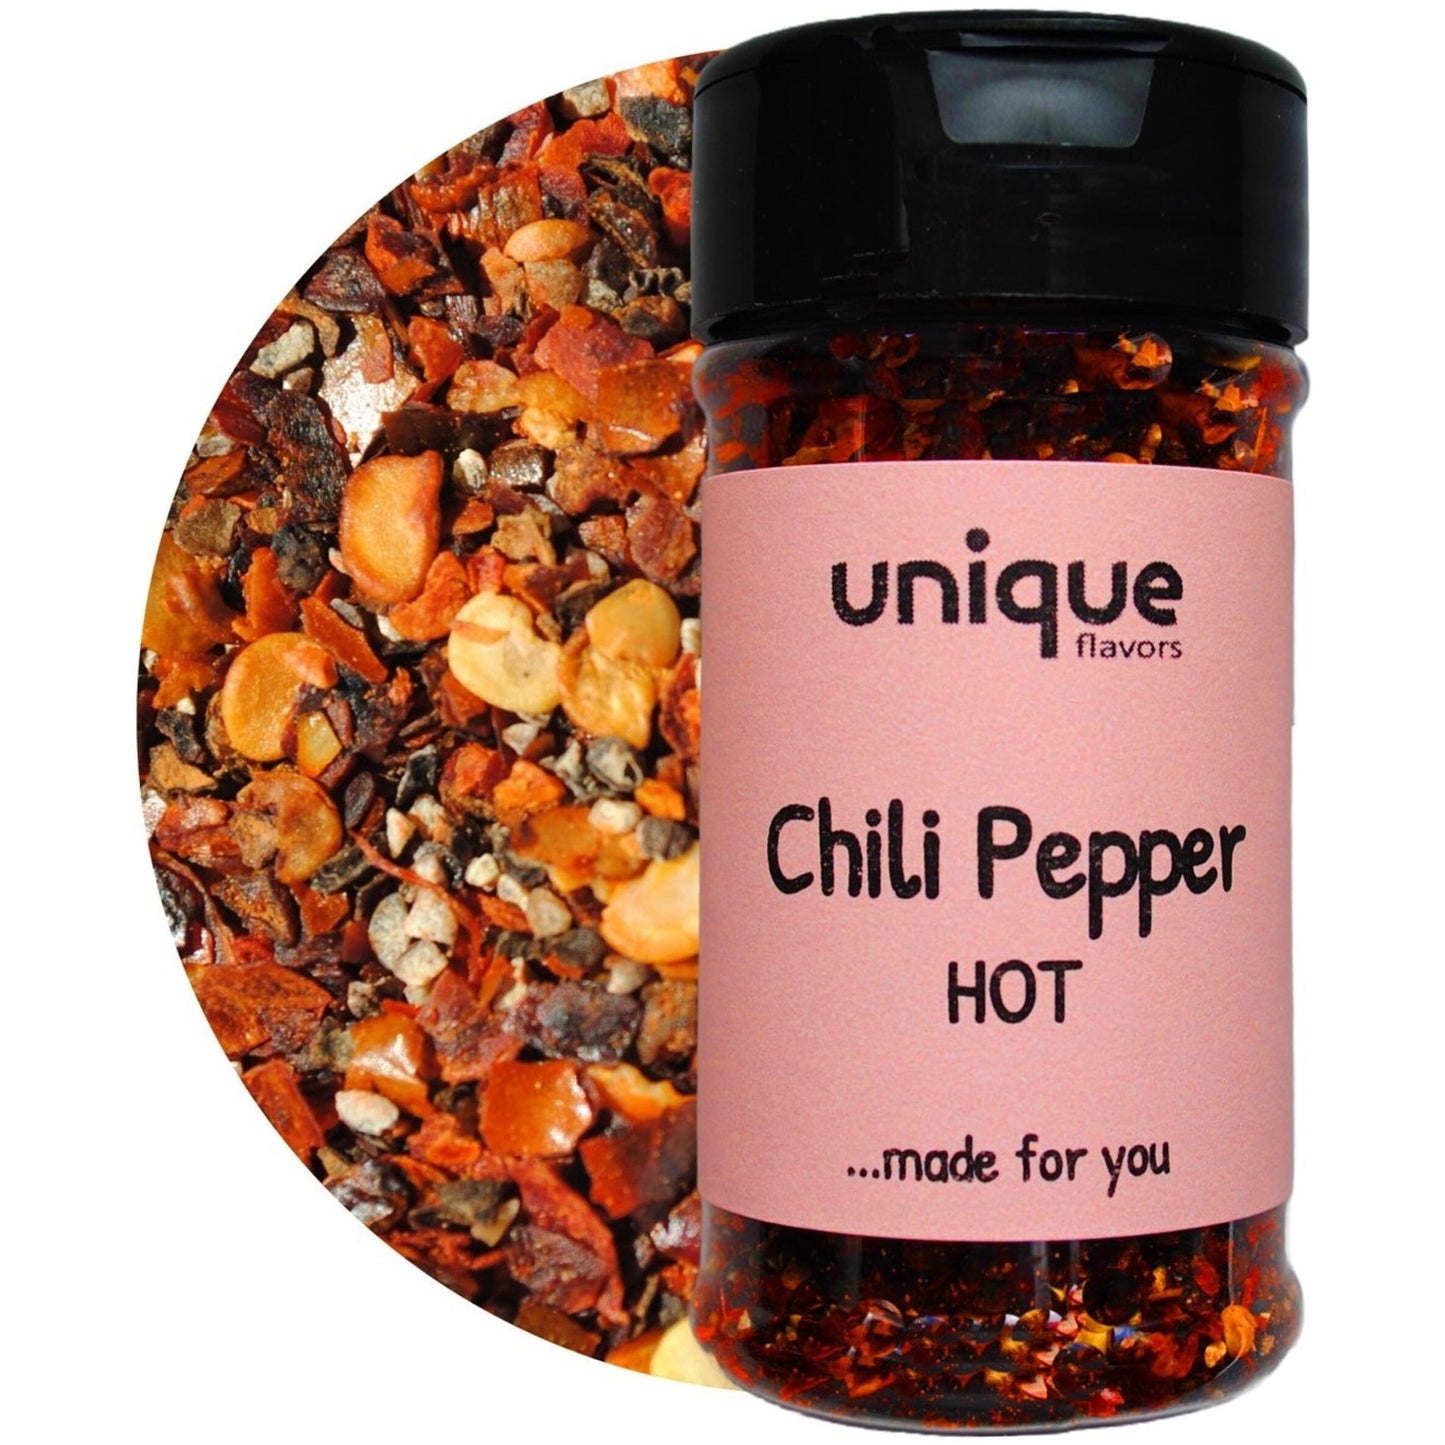 Chili Pepper Hot Seasoning Mix 1.5oz Easy Shaker - Unique Flavors Unique Flavors LLC 